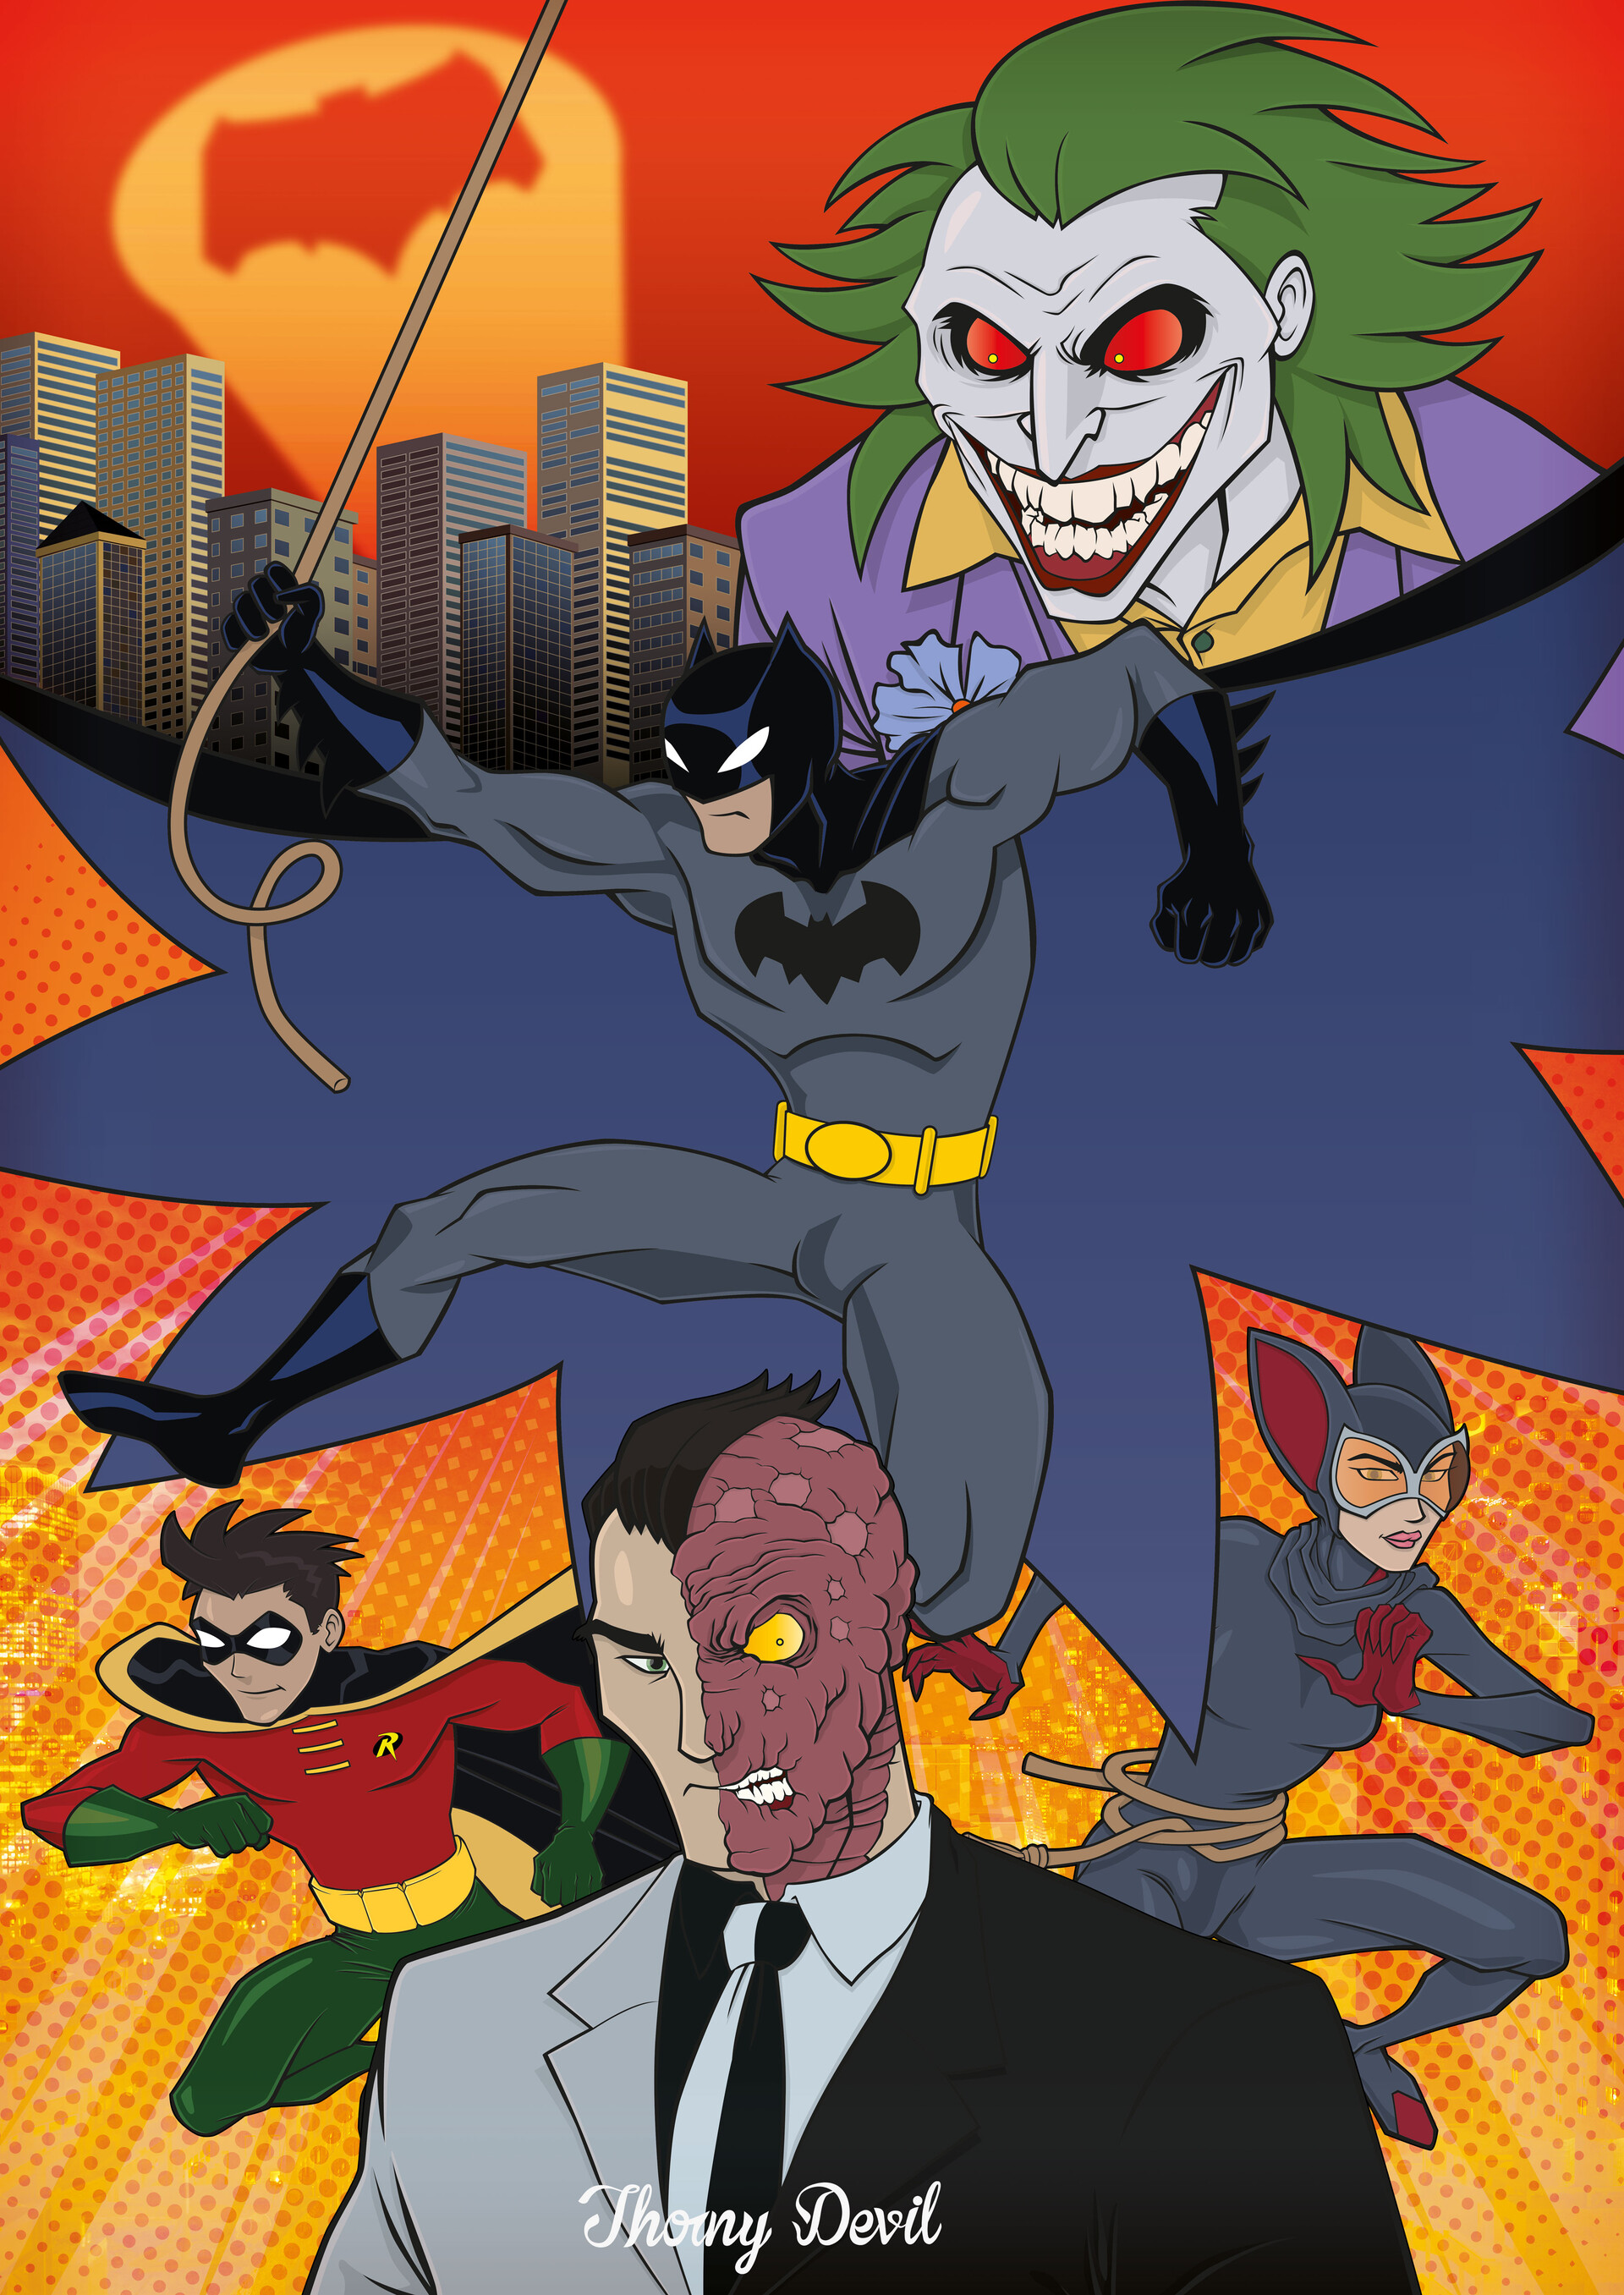 Thorny Devil - The Batman poster